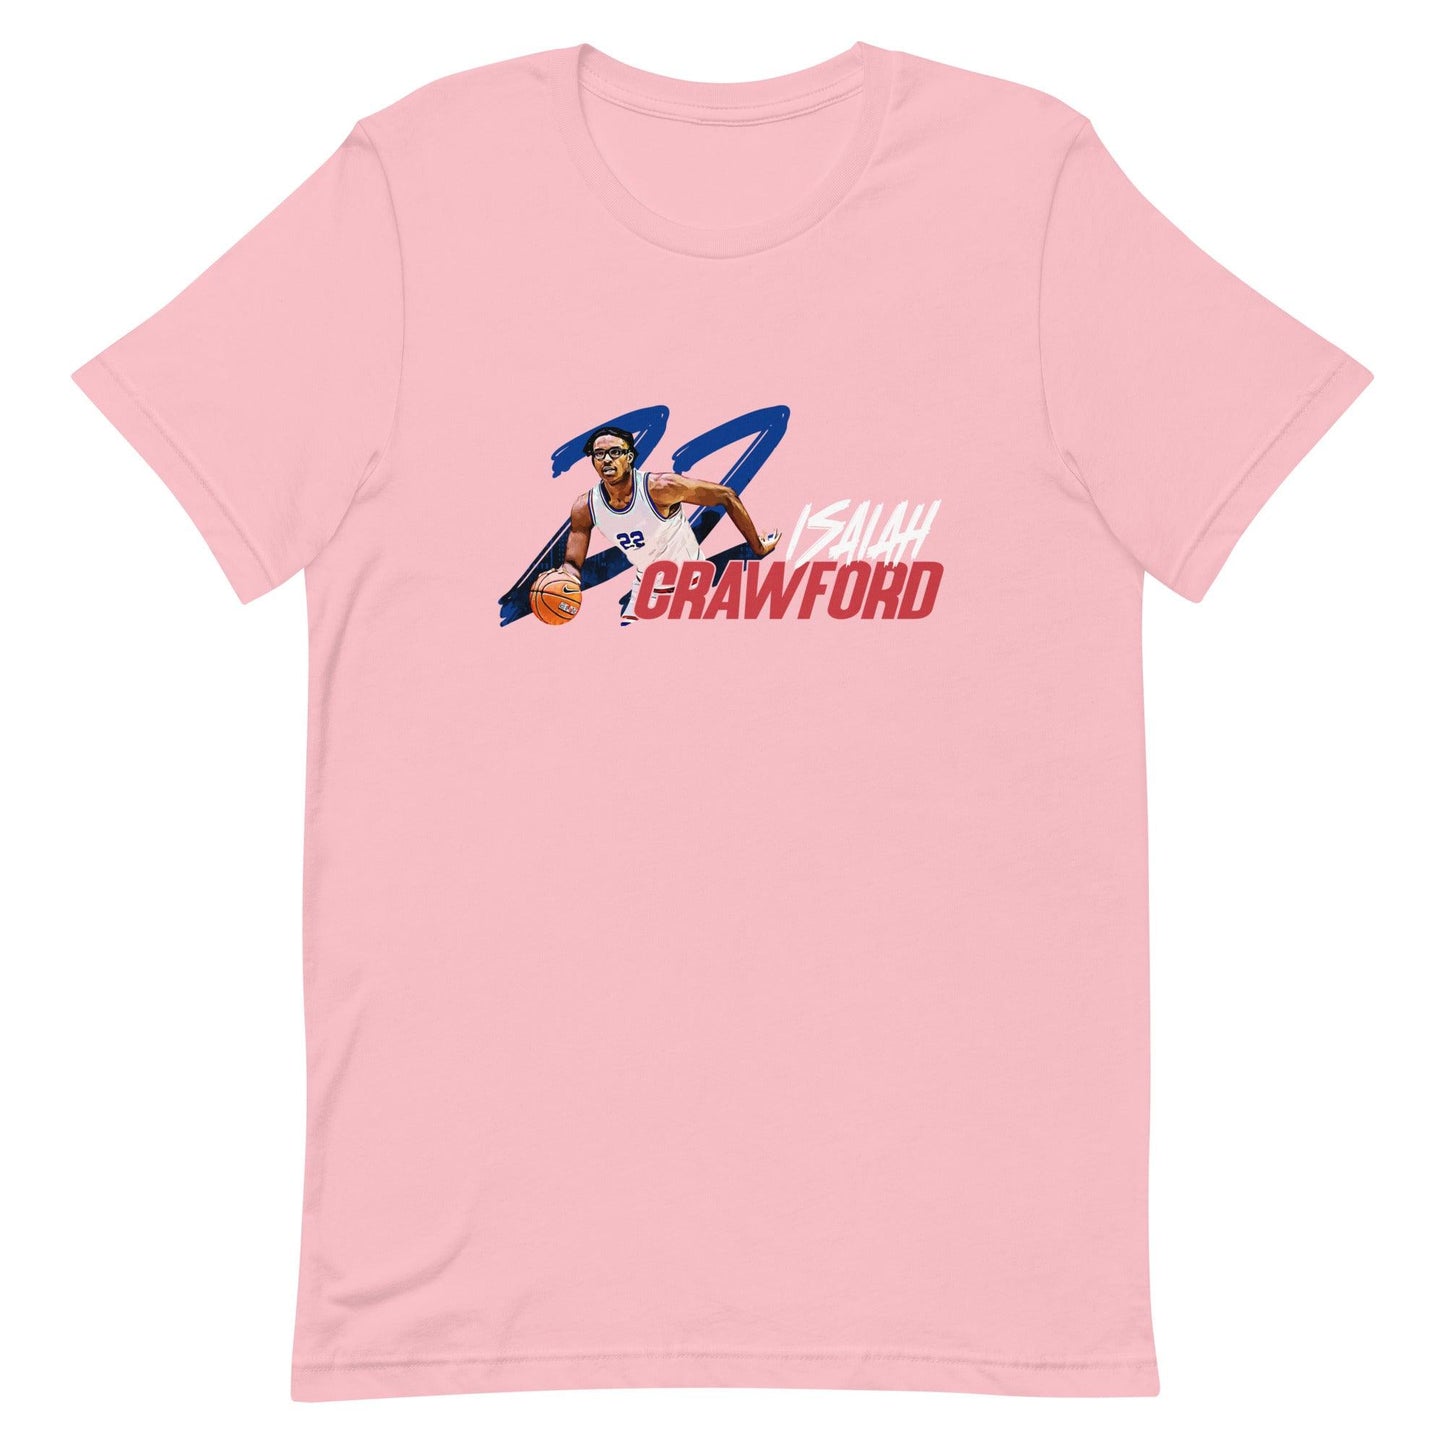 Isaiah Crawford "Gameday" t-shirt - Fan Arch